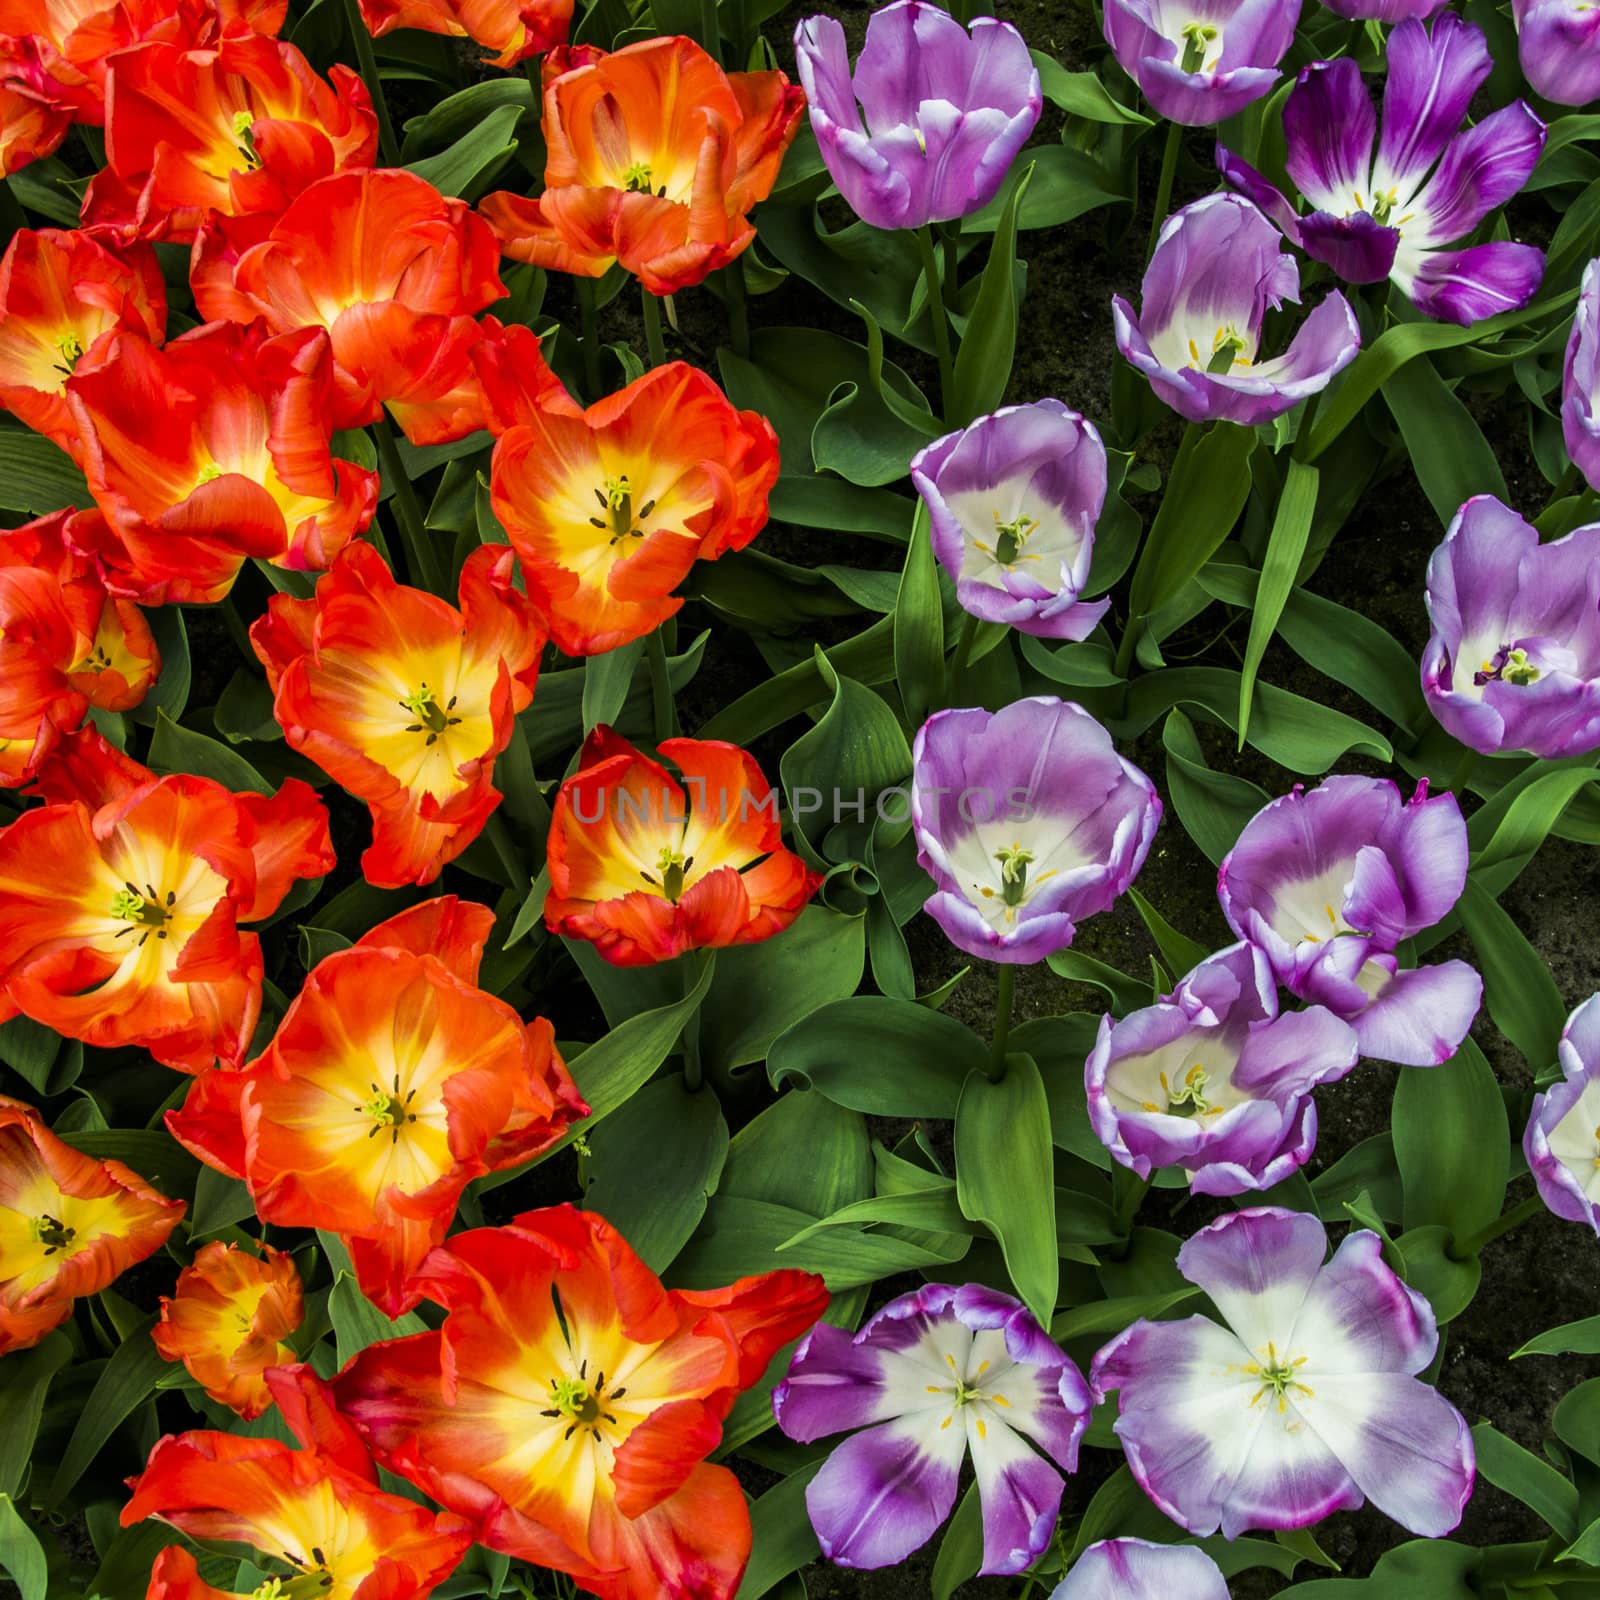 Tulips in the Keukenhof garden Netherlands by enrico.lapponi